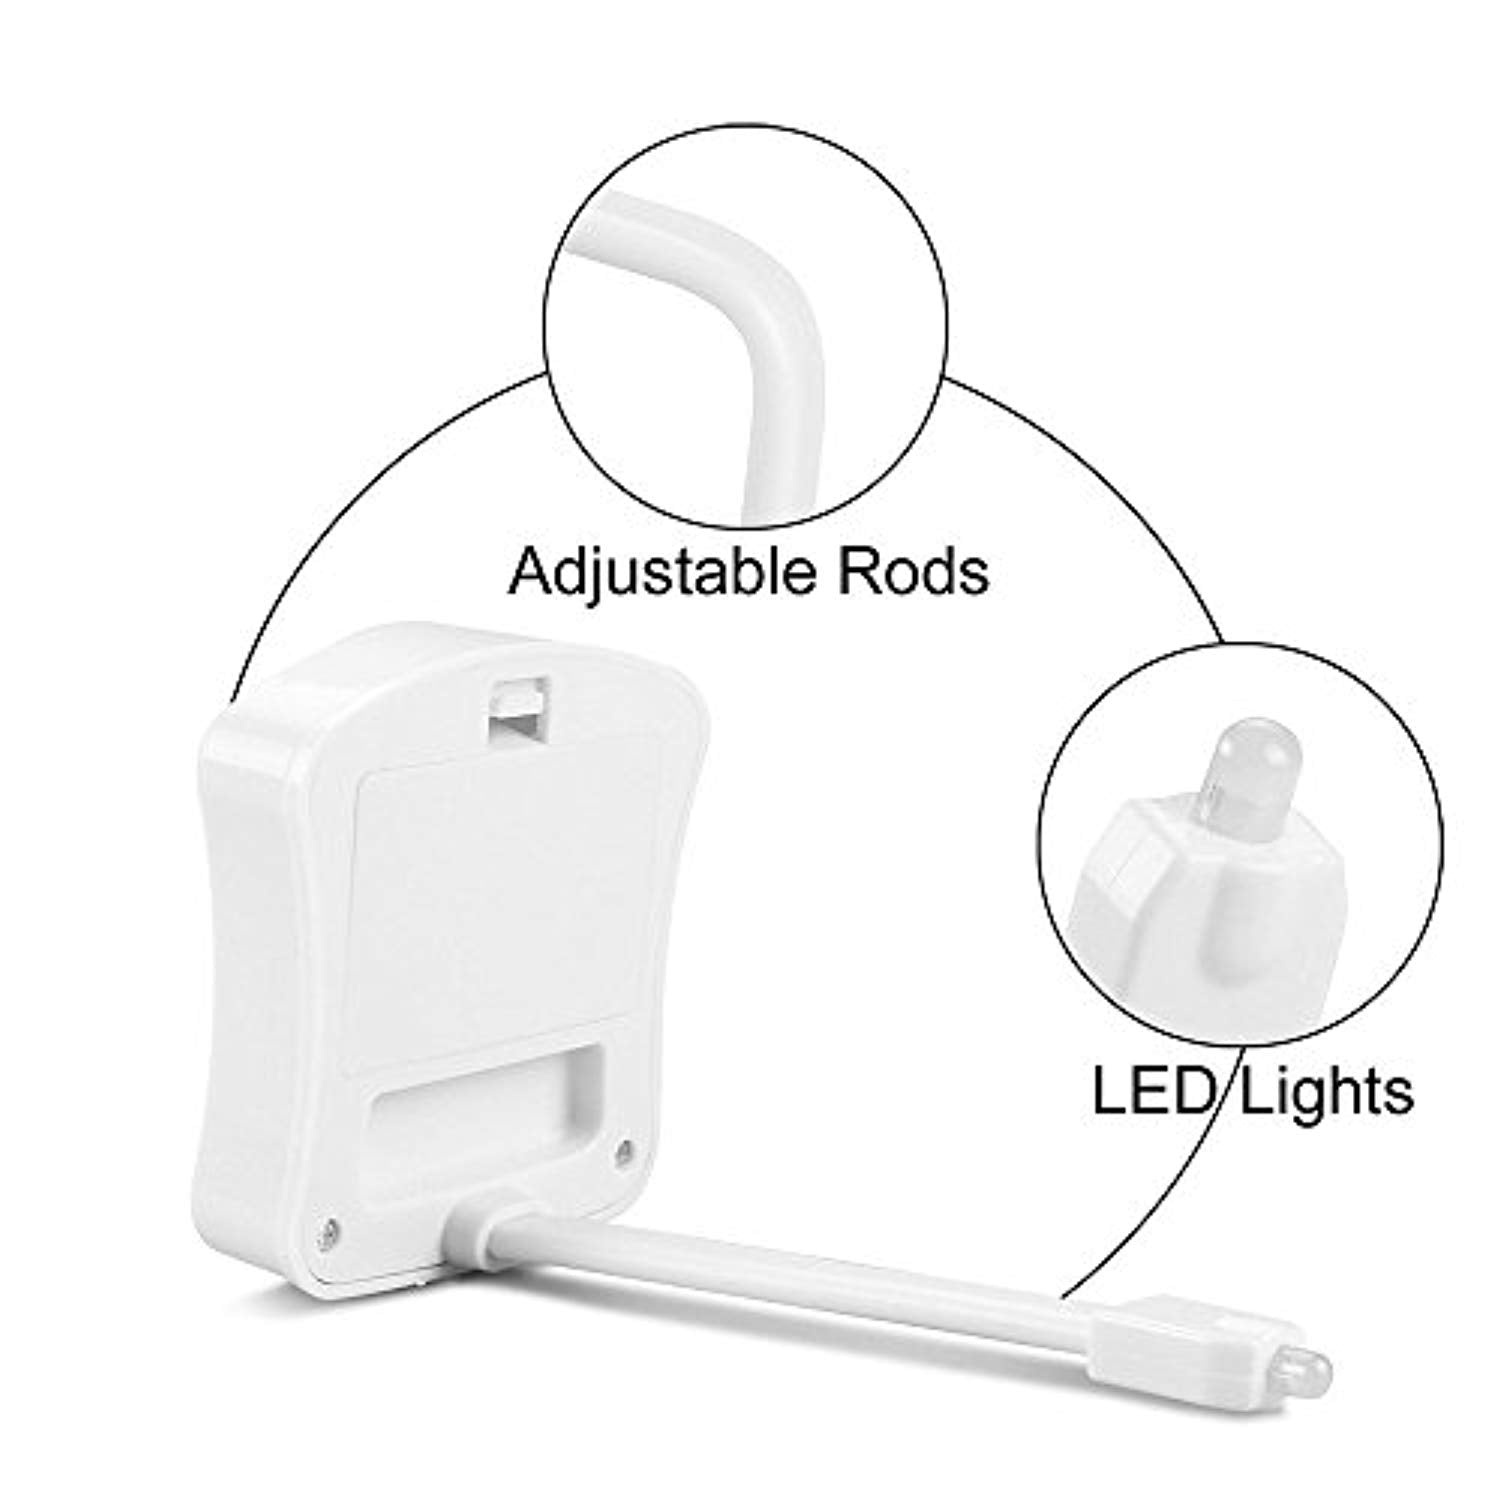 Smart Motion Sensor Lights 8 Color Waterproof Toilet Seat LED